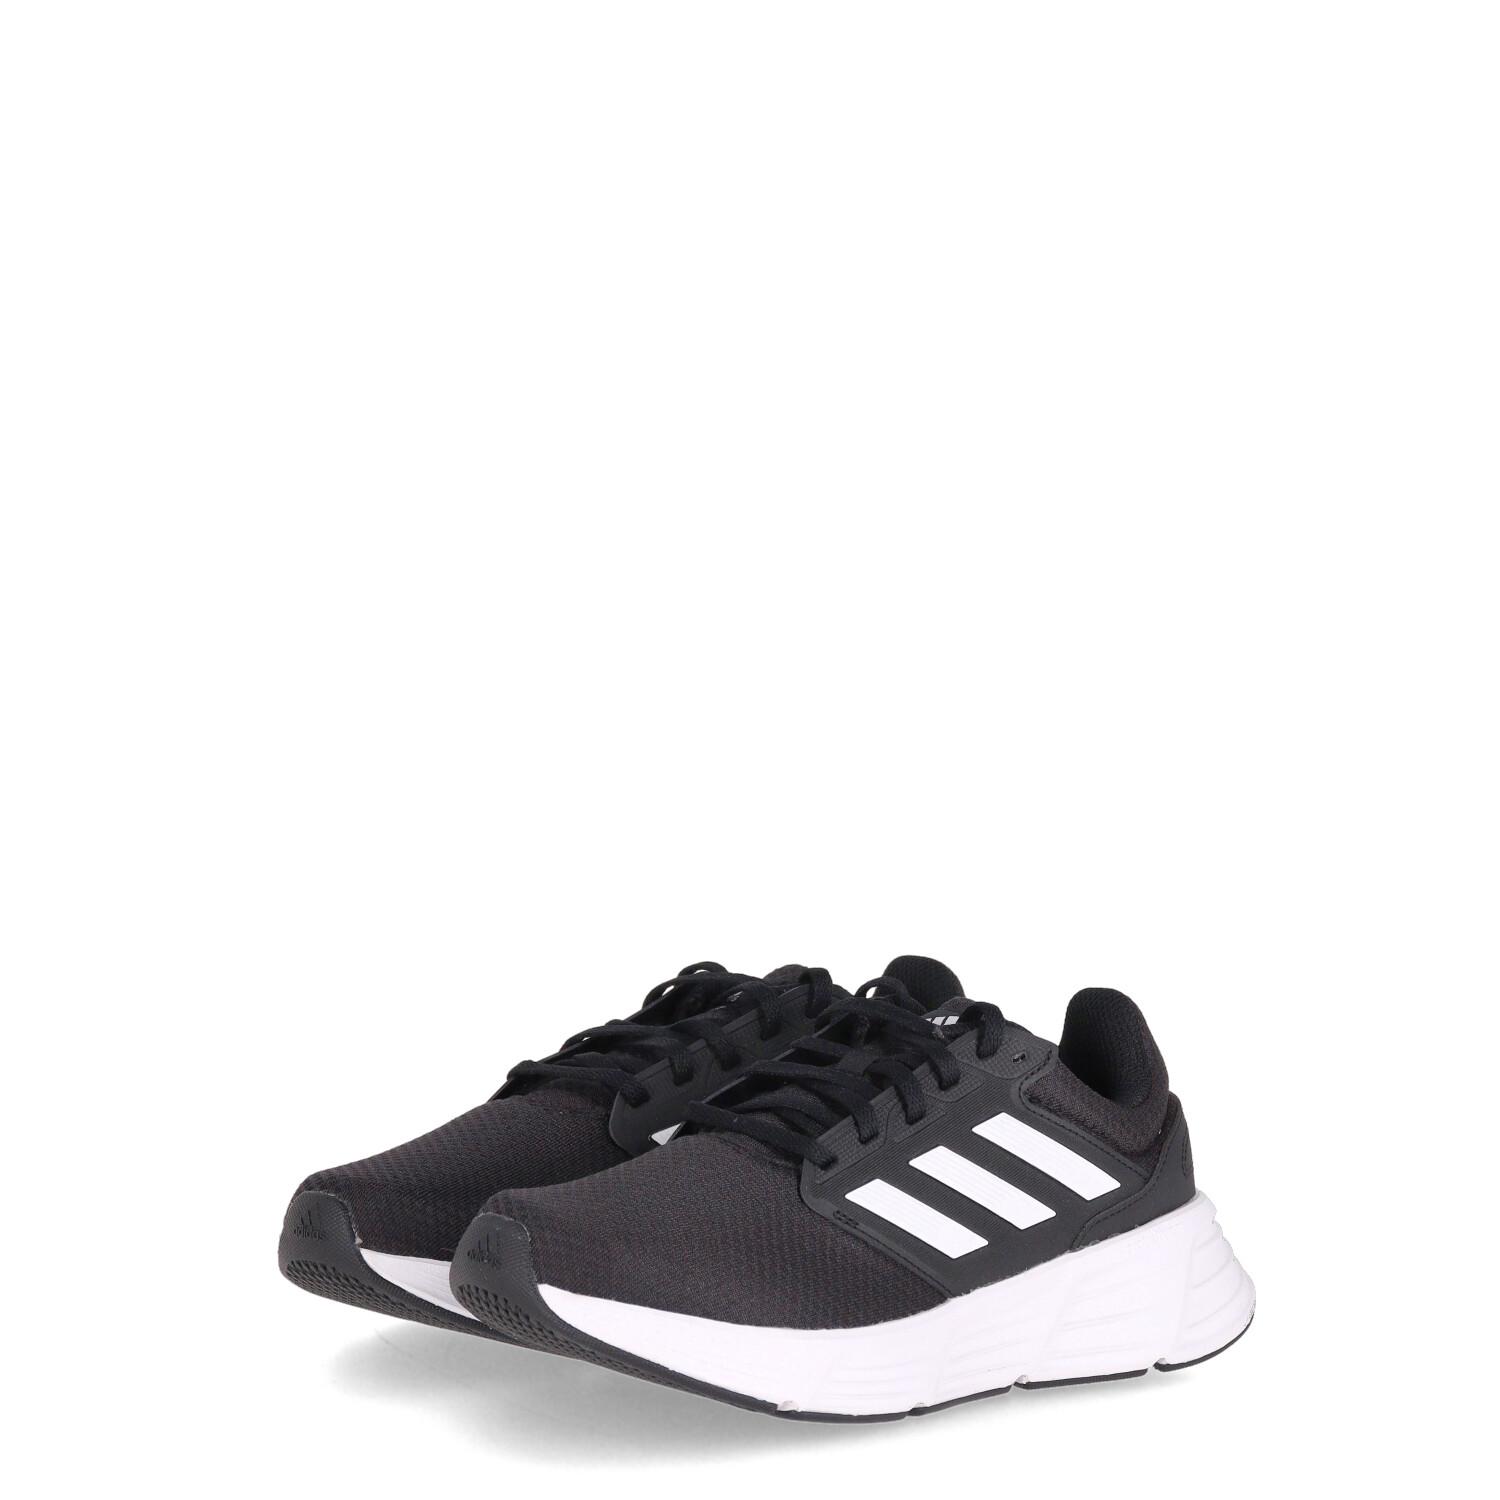 Adidas Galaxy 6 Black white